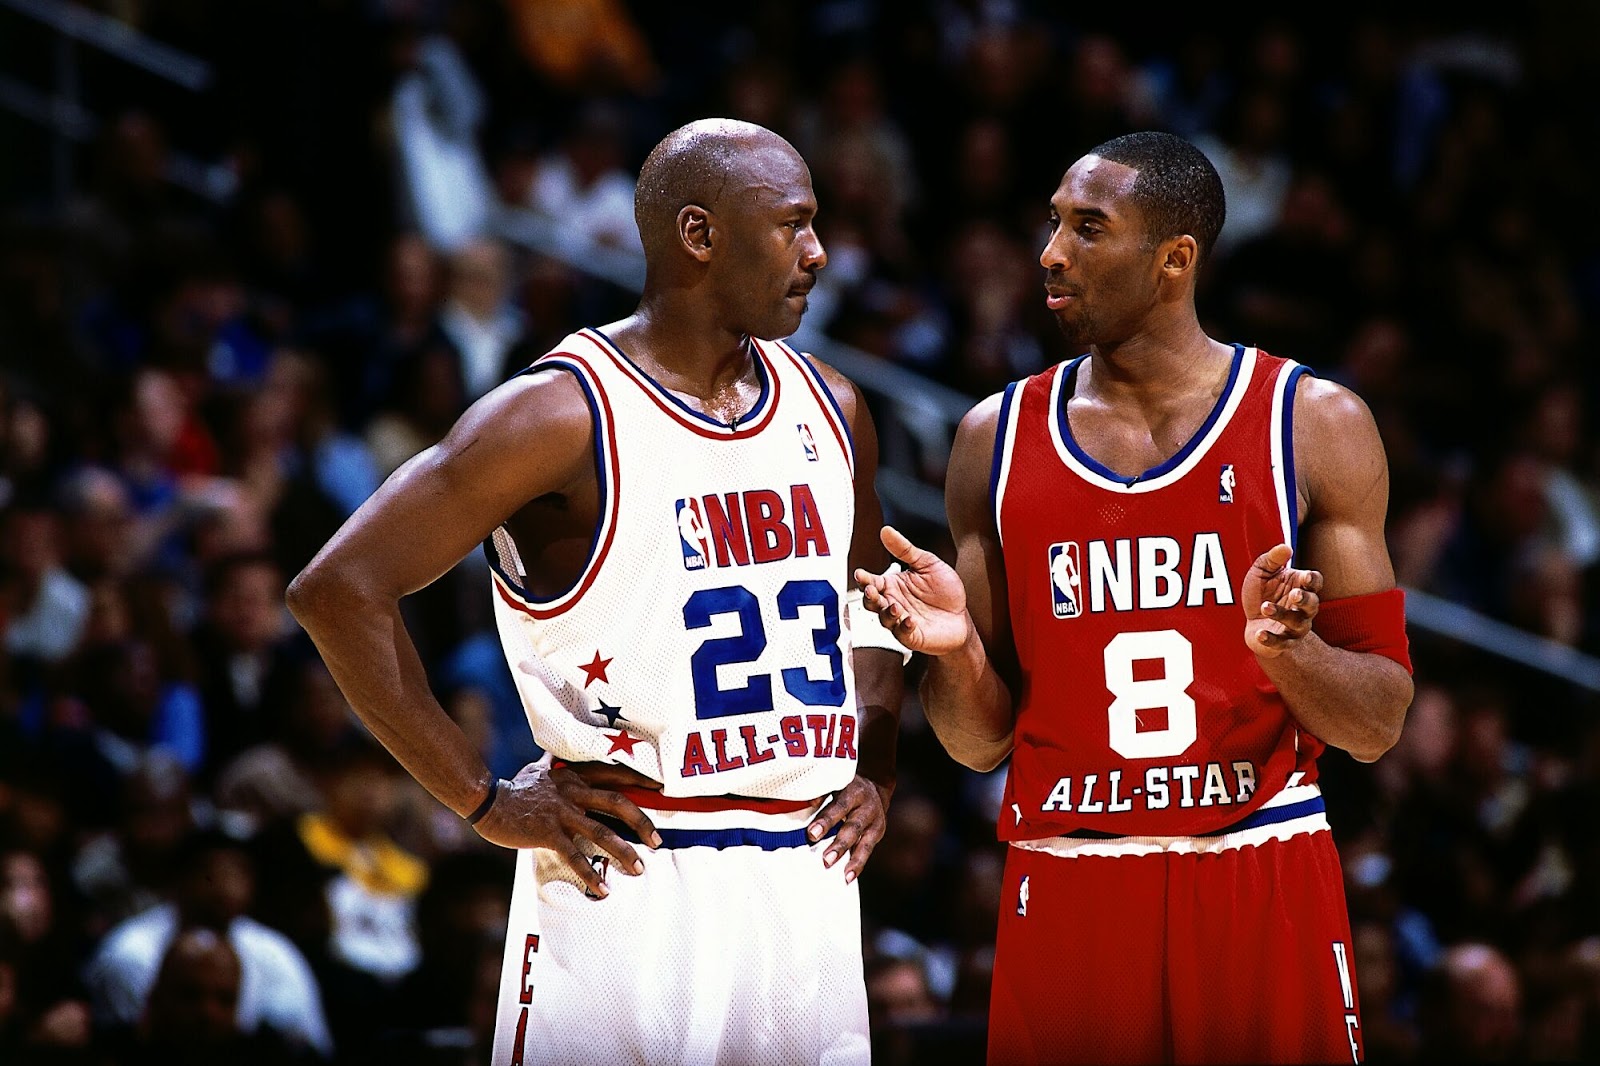 Kobe Bryant talks to Michael Jordan during the 2003 NBA All-Star game.